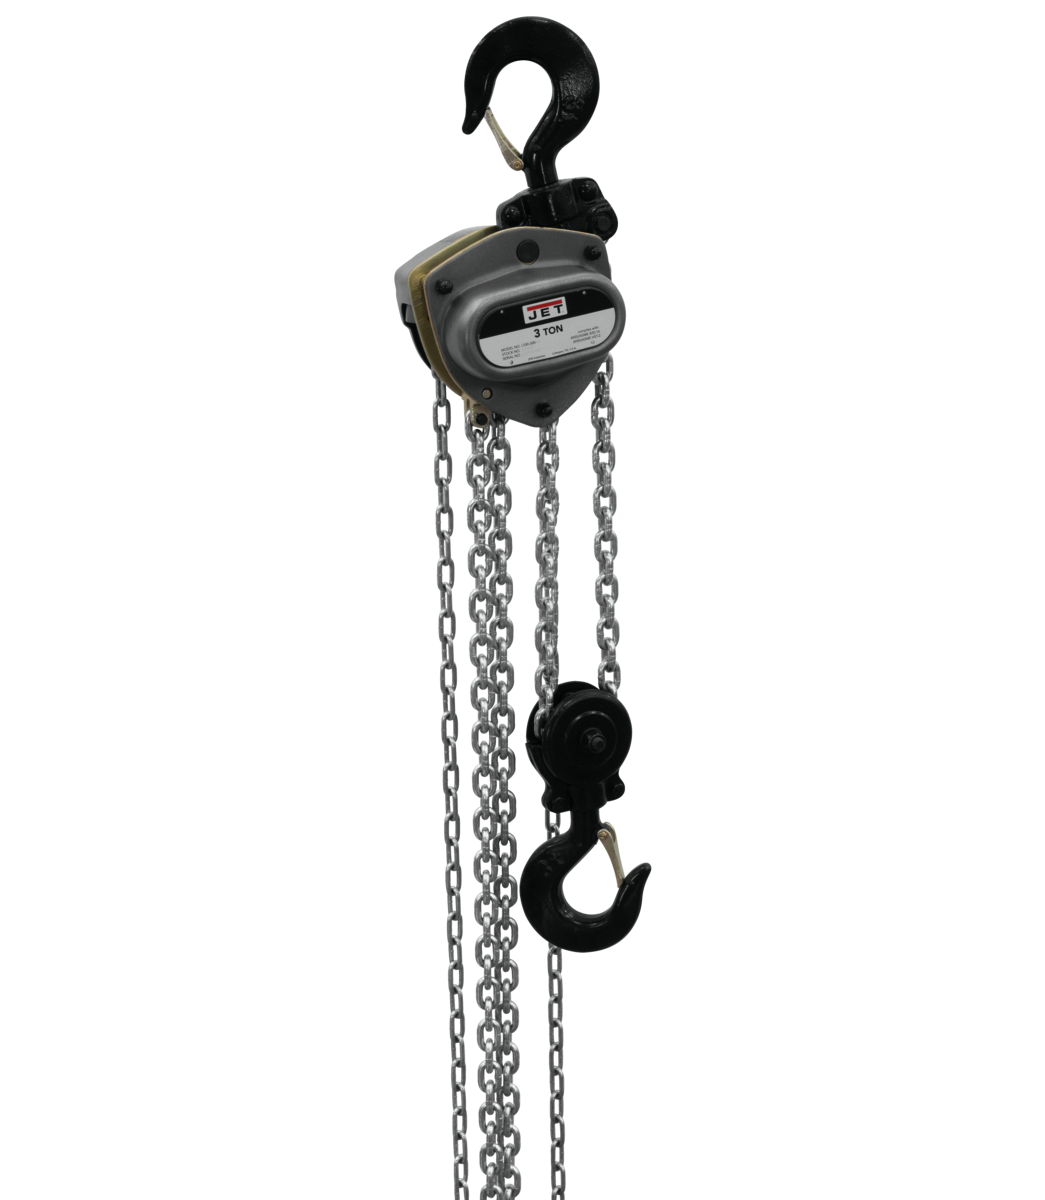 JET 3-Ton Hand Chain Hoist w/ Overload Protection